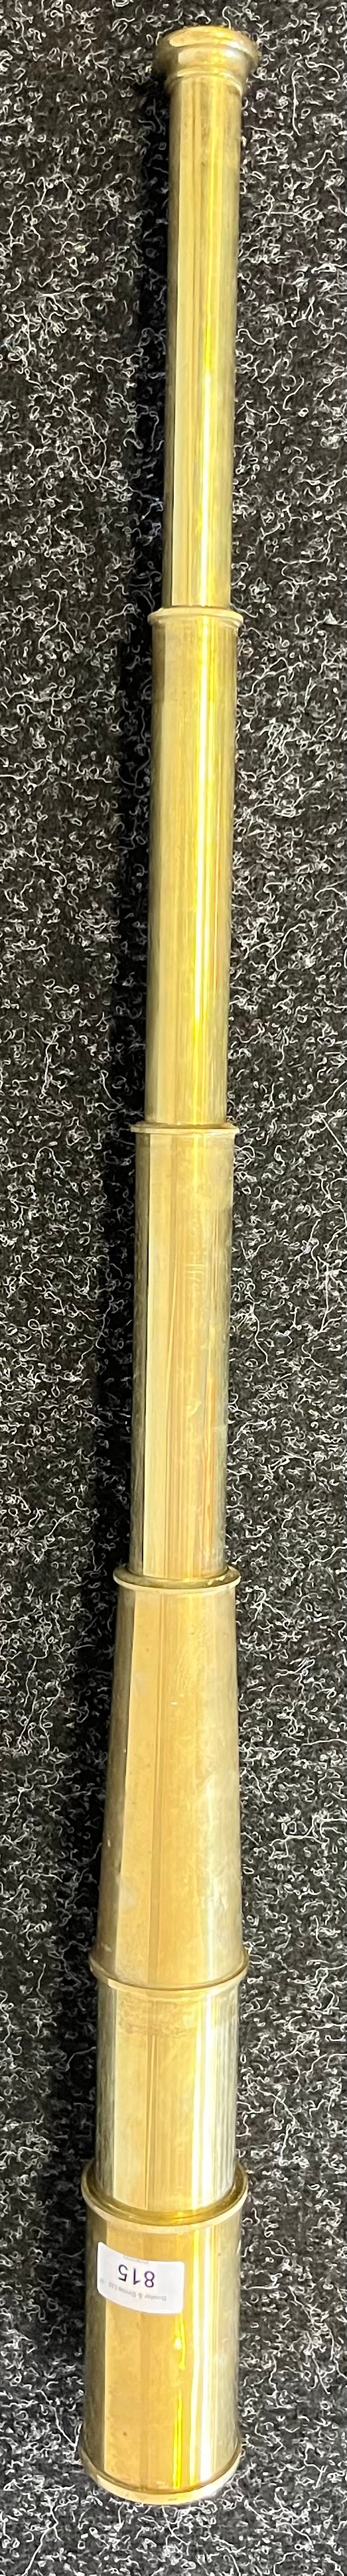 Brass three pull scope. [92cm in length]